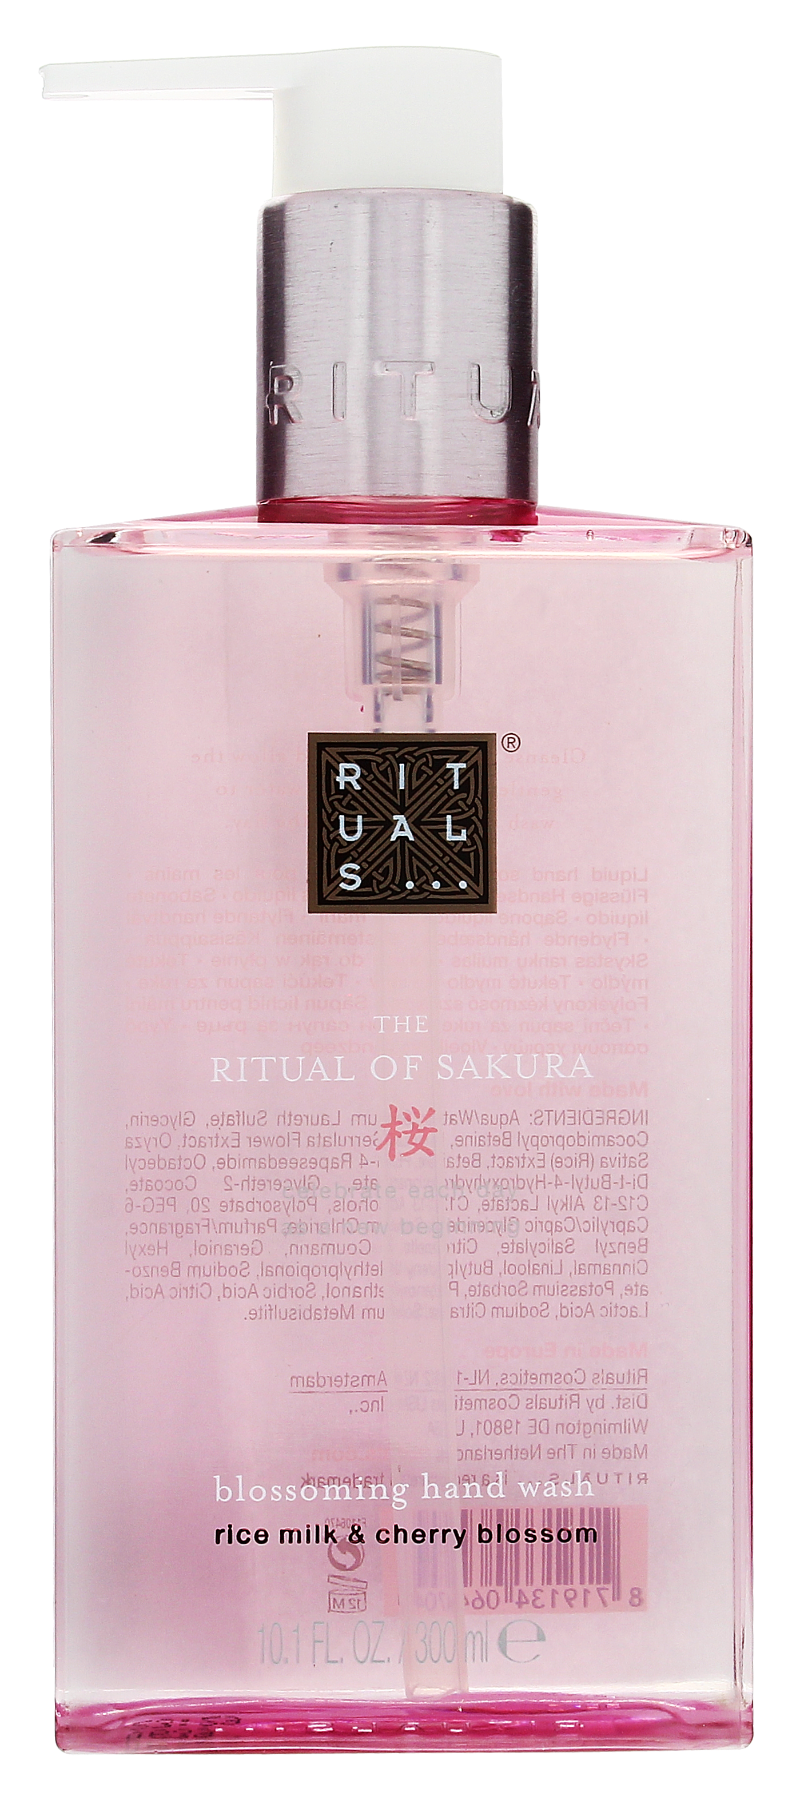 Rituals The Ritual of Sakura Blossoming Hand Wash ab 9,85